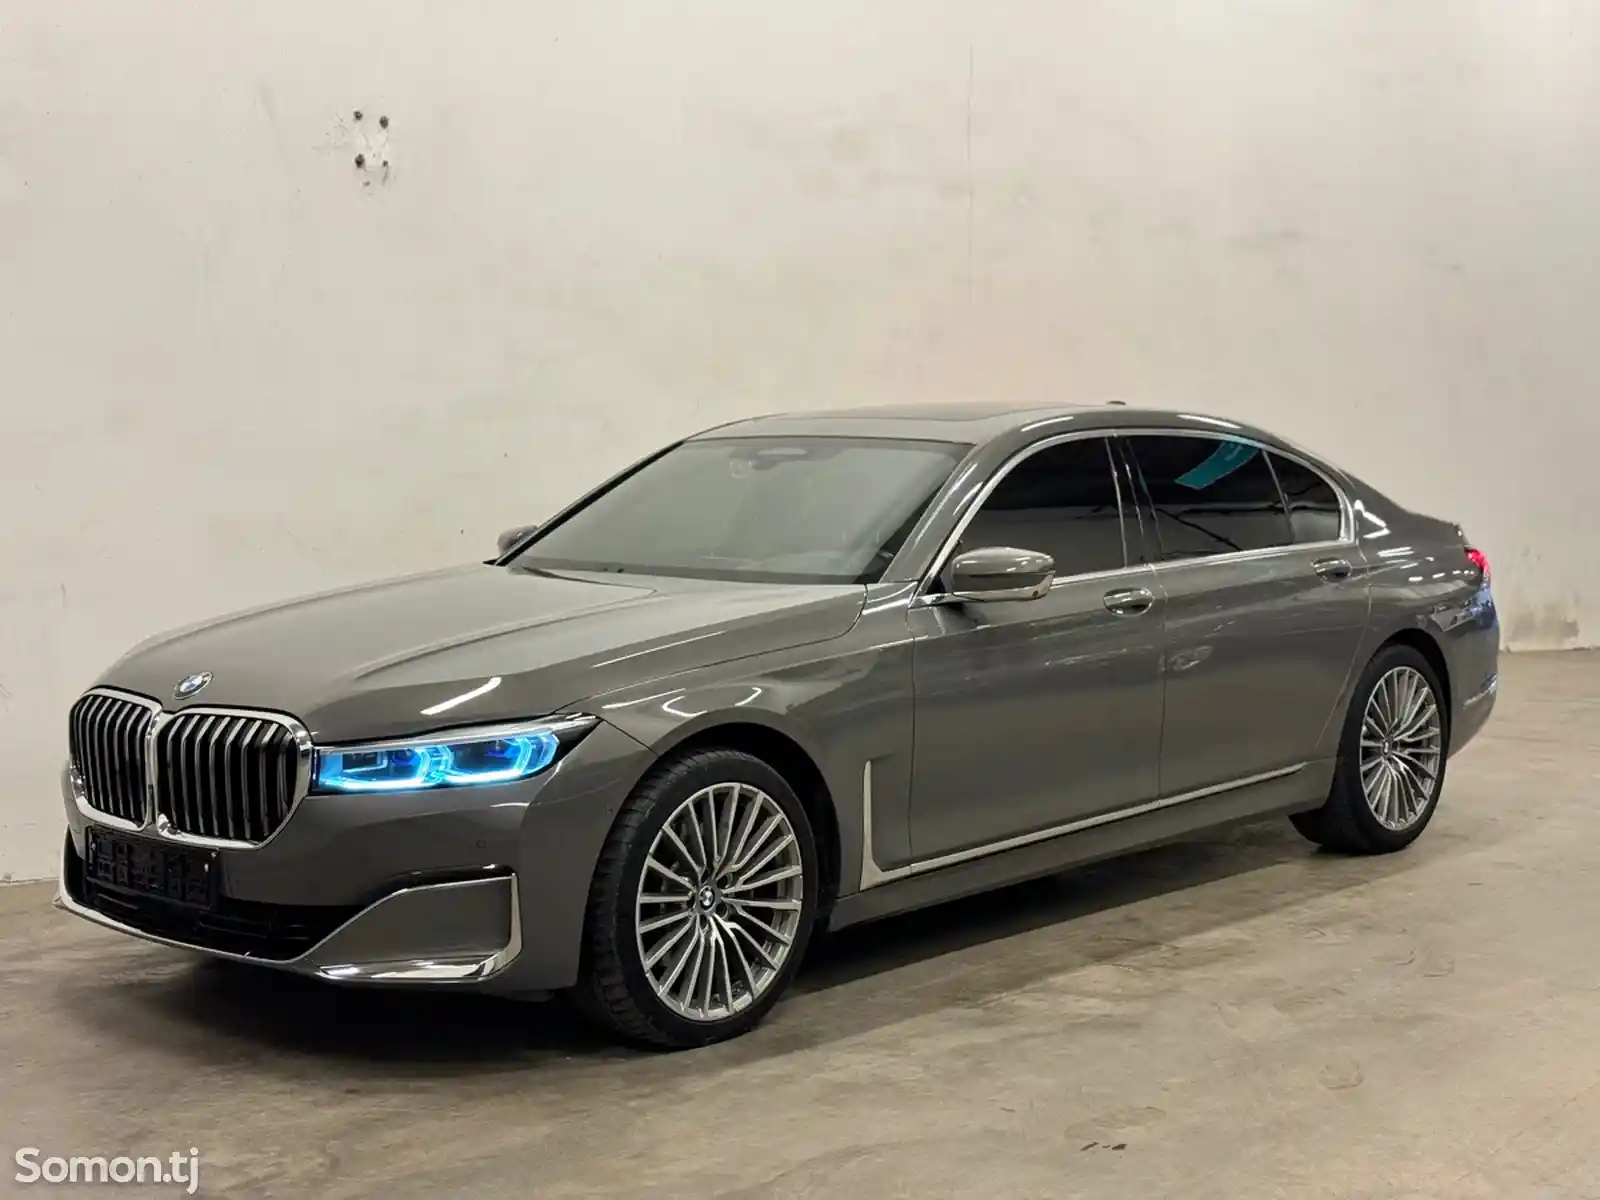 BMW 7 series, 2020-10